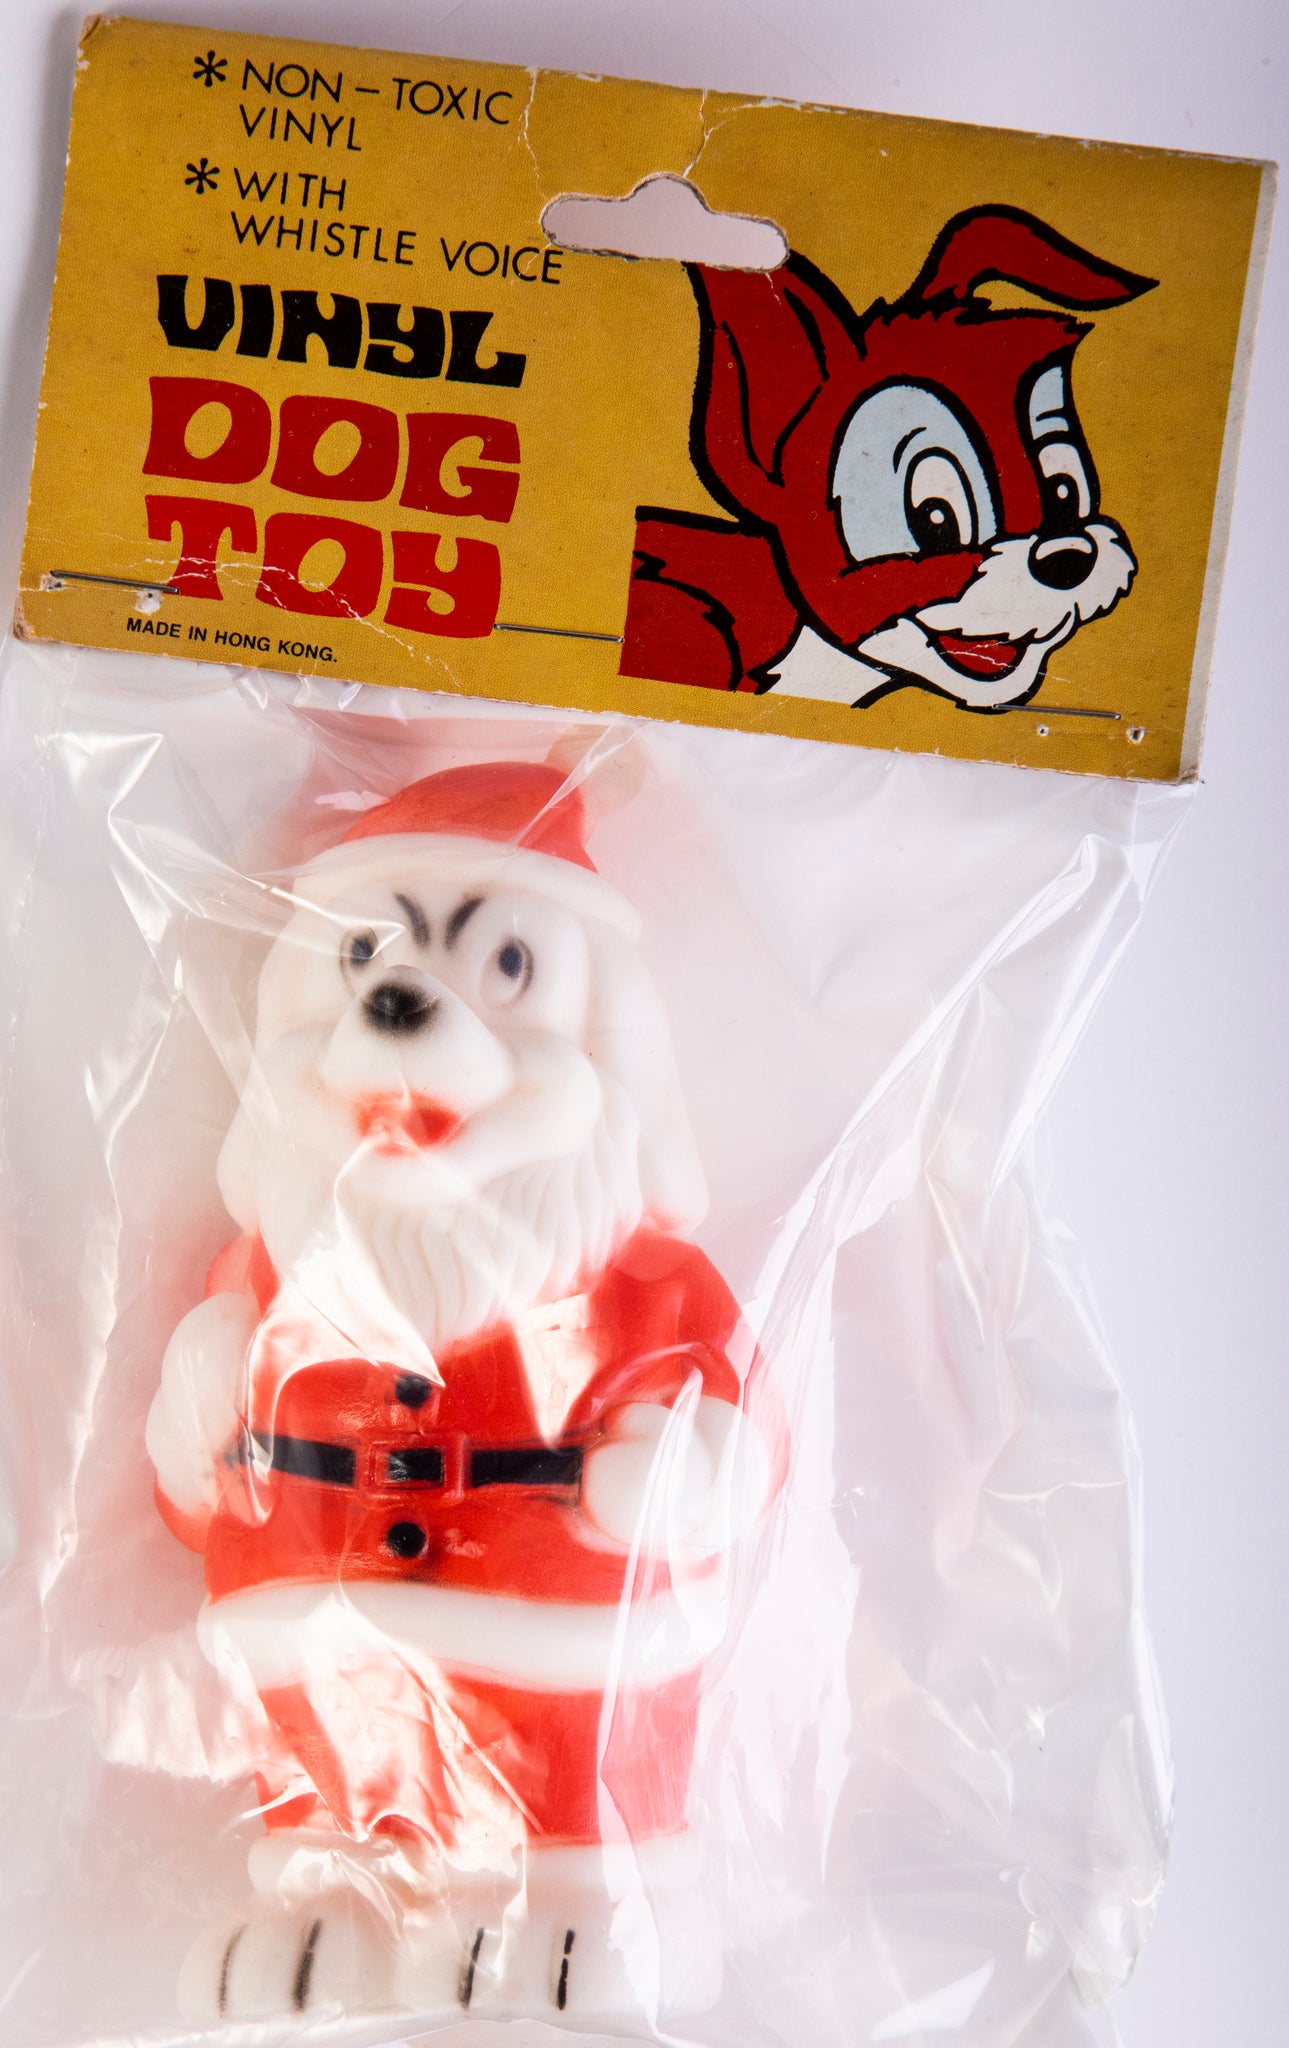 Snoopy Candy Cane Dog Toy Peanuts Christmas Vintage Collectable Squeak Pet Xmas Geisler 48143 ConAgra